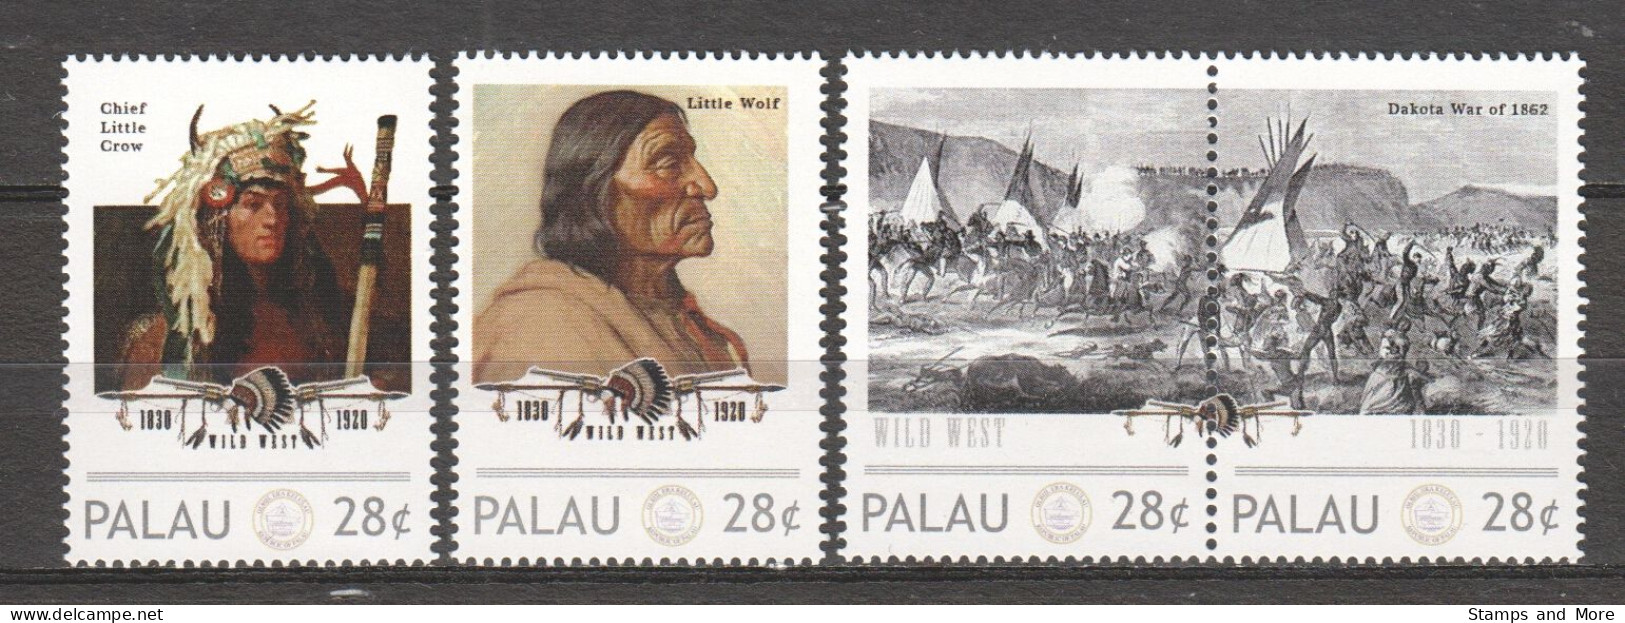 Palau - MNH Set (5) NATIVE AMERICANS - WILD WEST 1830-1920 - American Indians